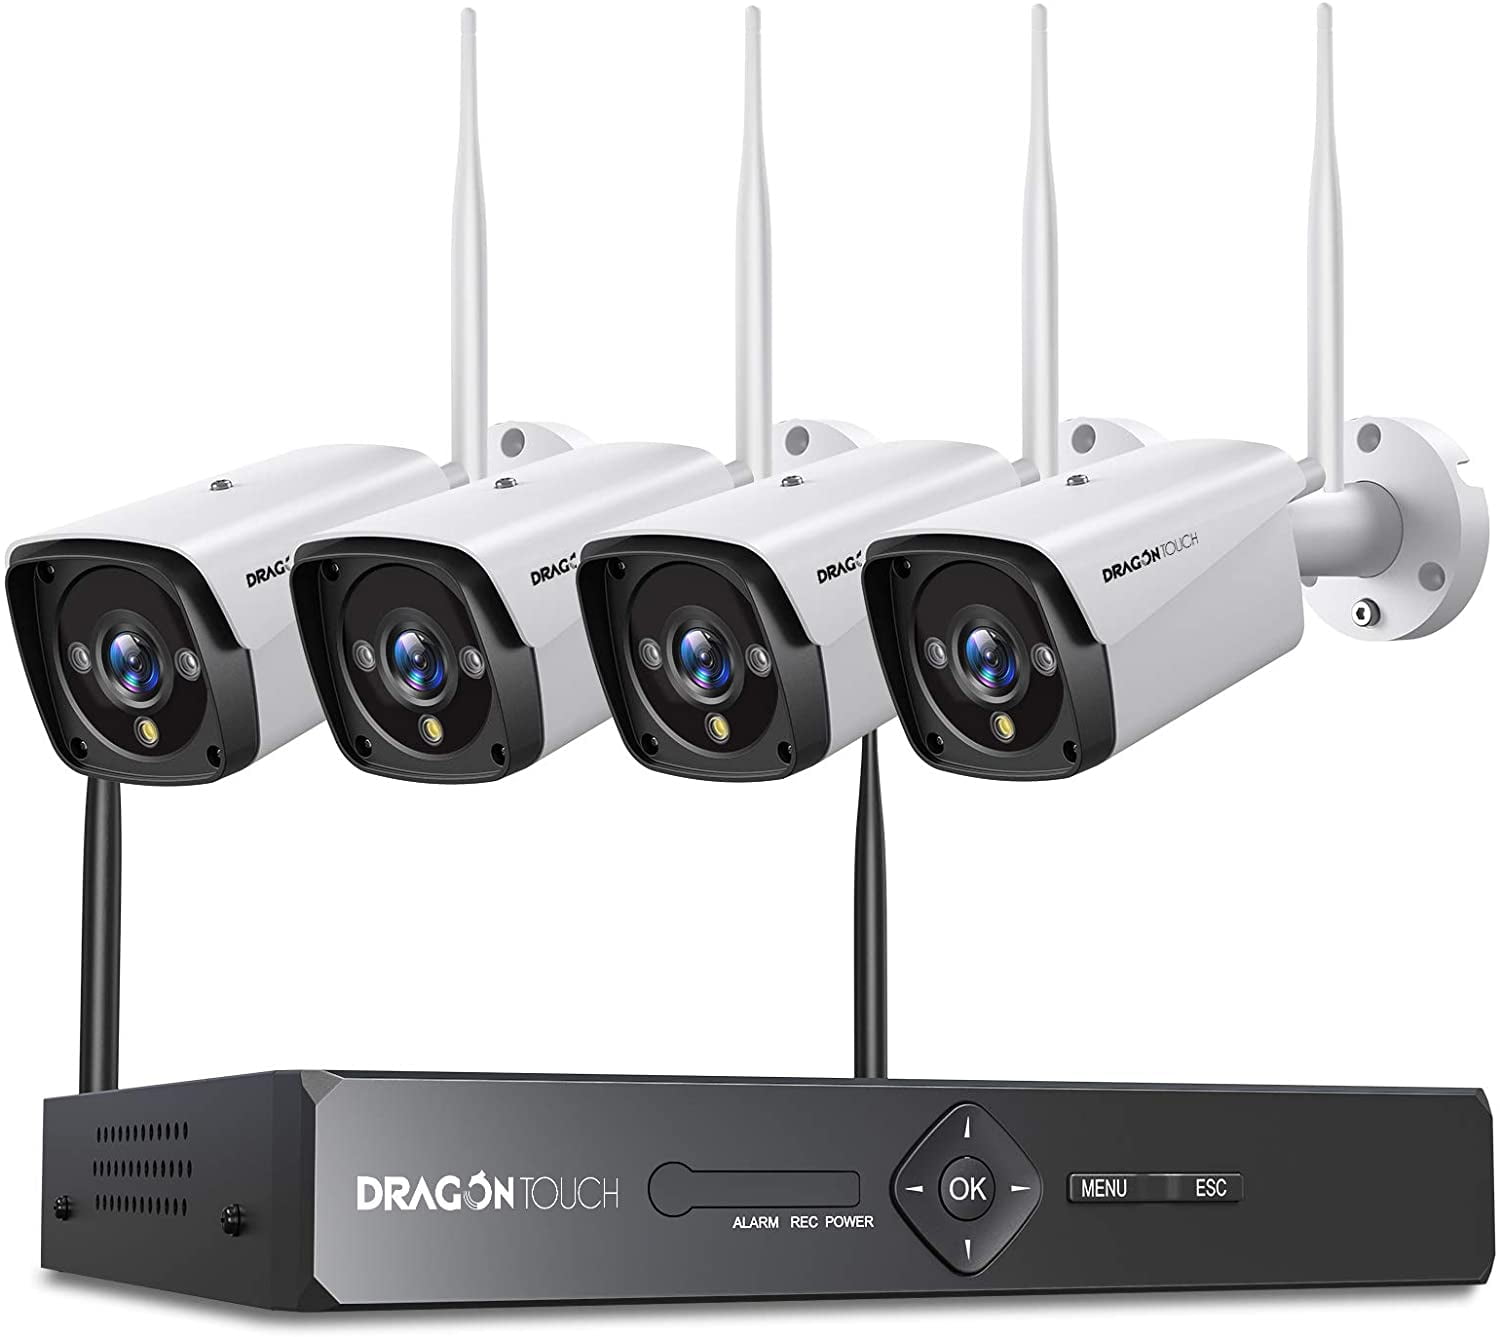 METAL SPY SECURITY CCTV VIDEO SURVEILLANCE CAMERA SYSTEM WARNING YARD SIGNS LOT 